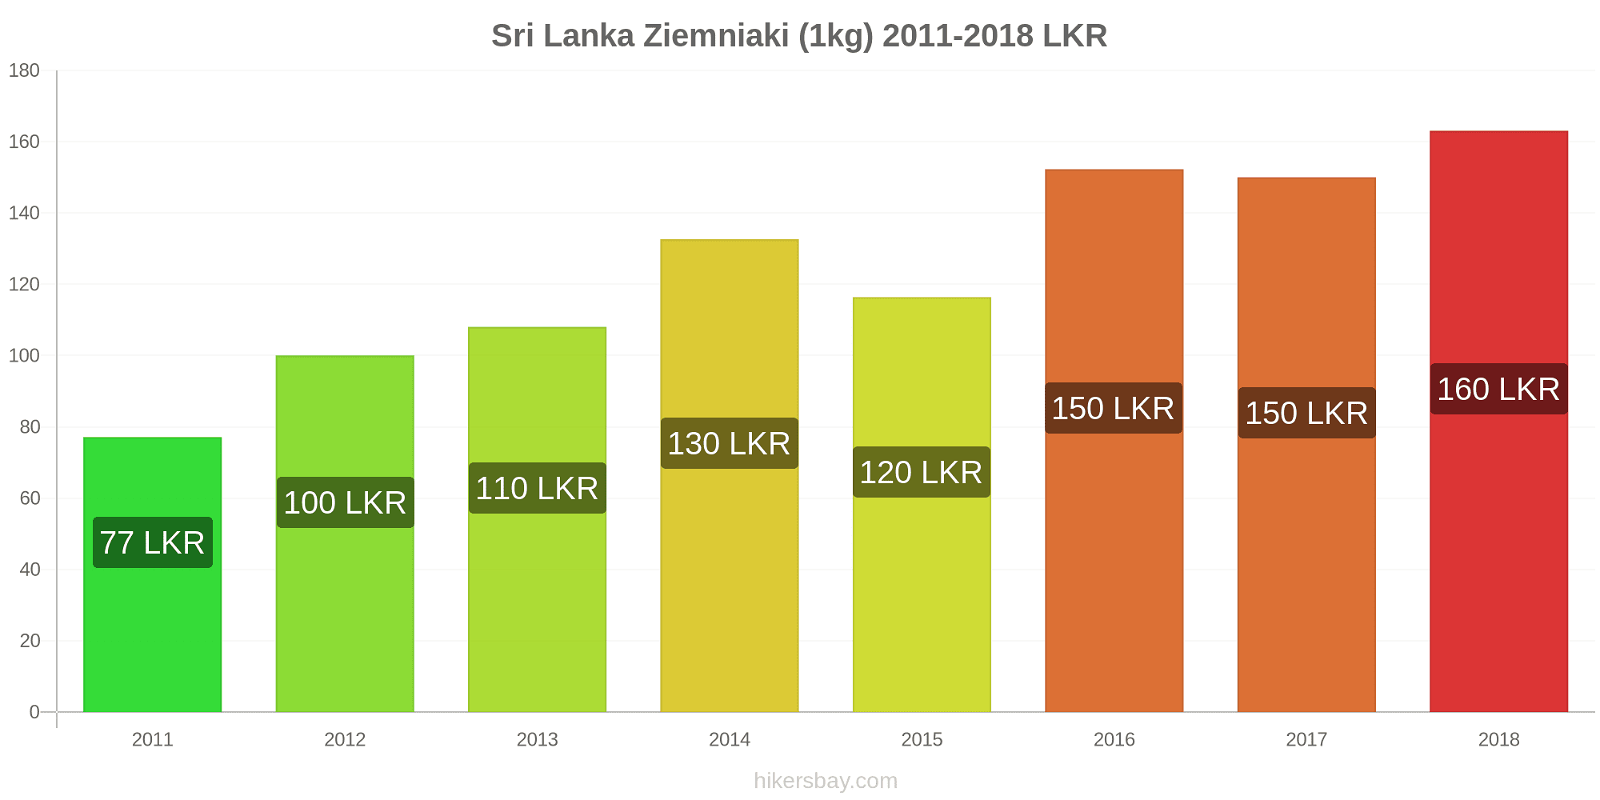 Sri Lanka zmiany cen Ziemniaki (1kg) hikersbay.com